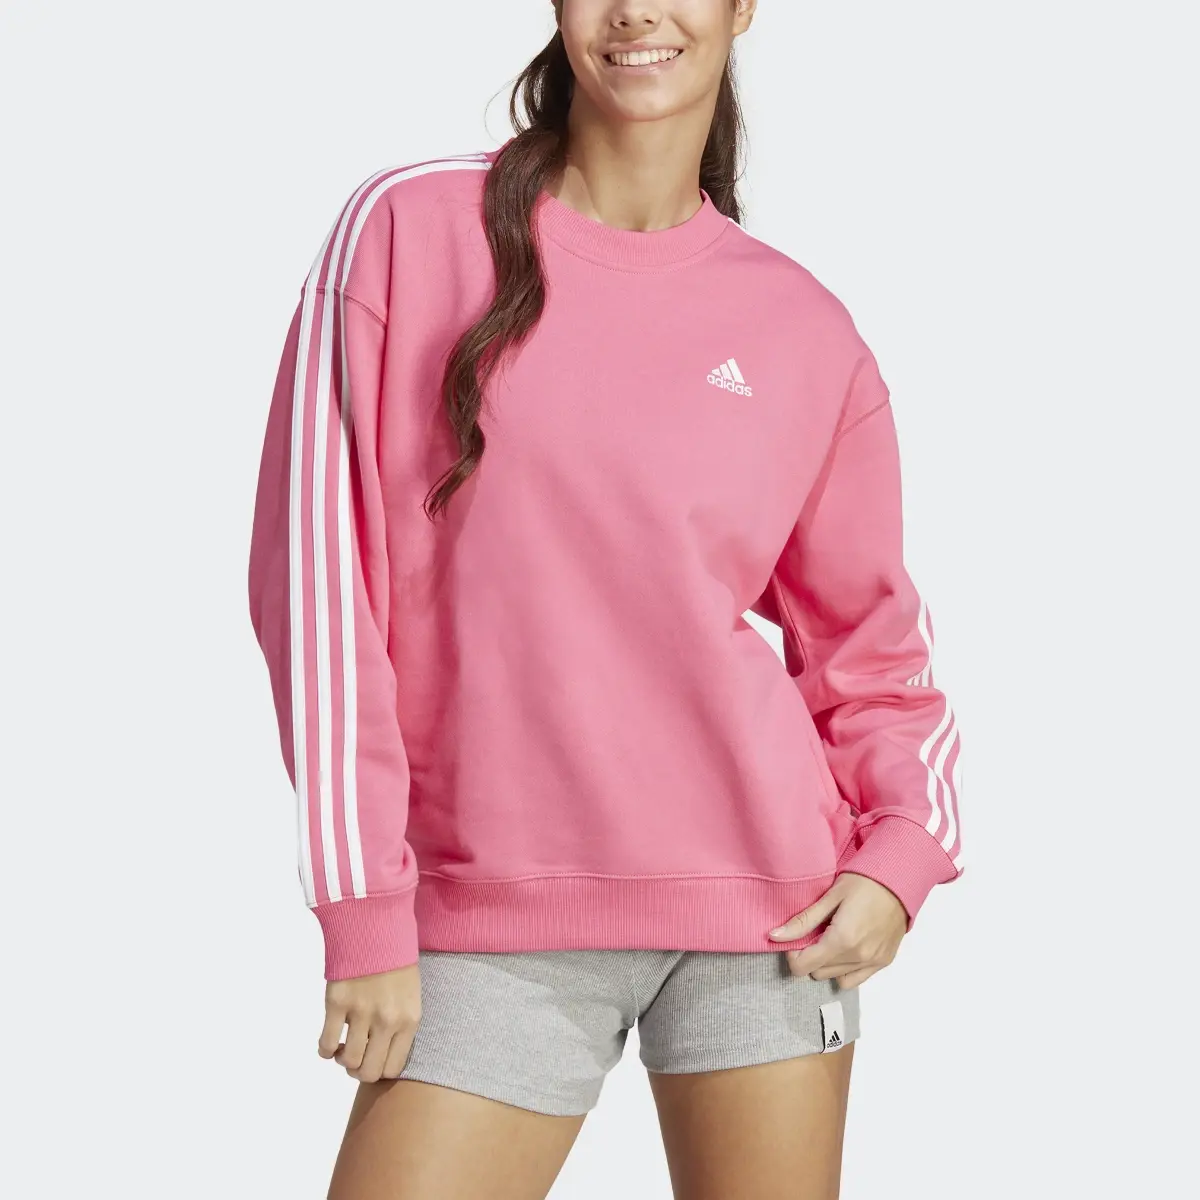 Adidas Essentials 3-Stripes Sweatshirt. 1